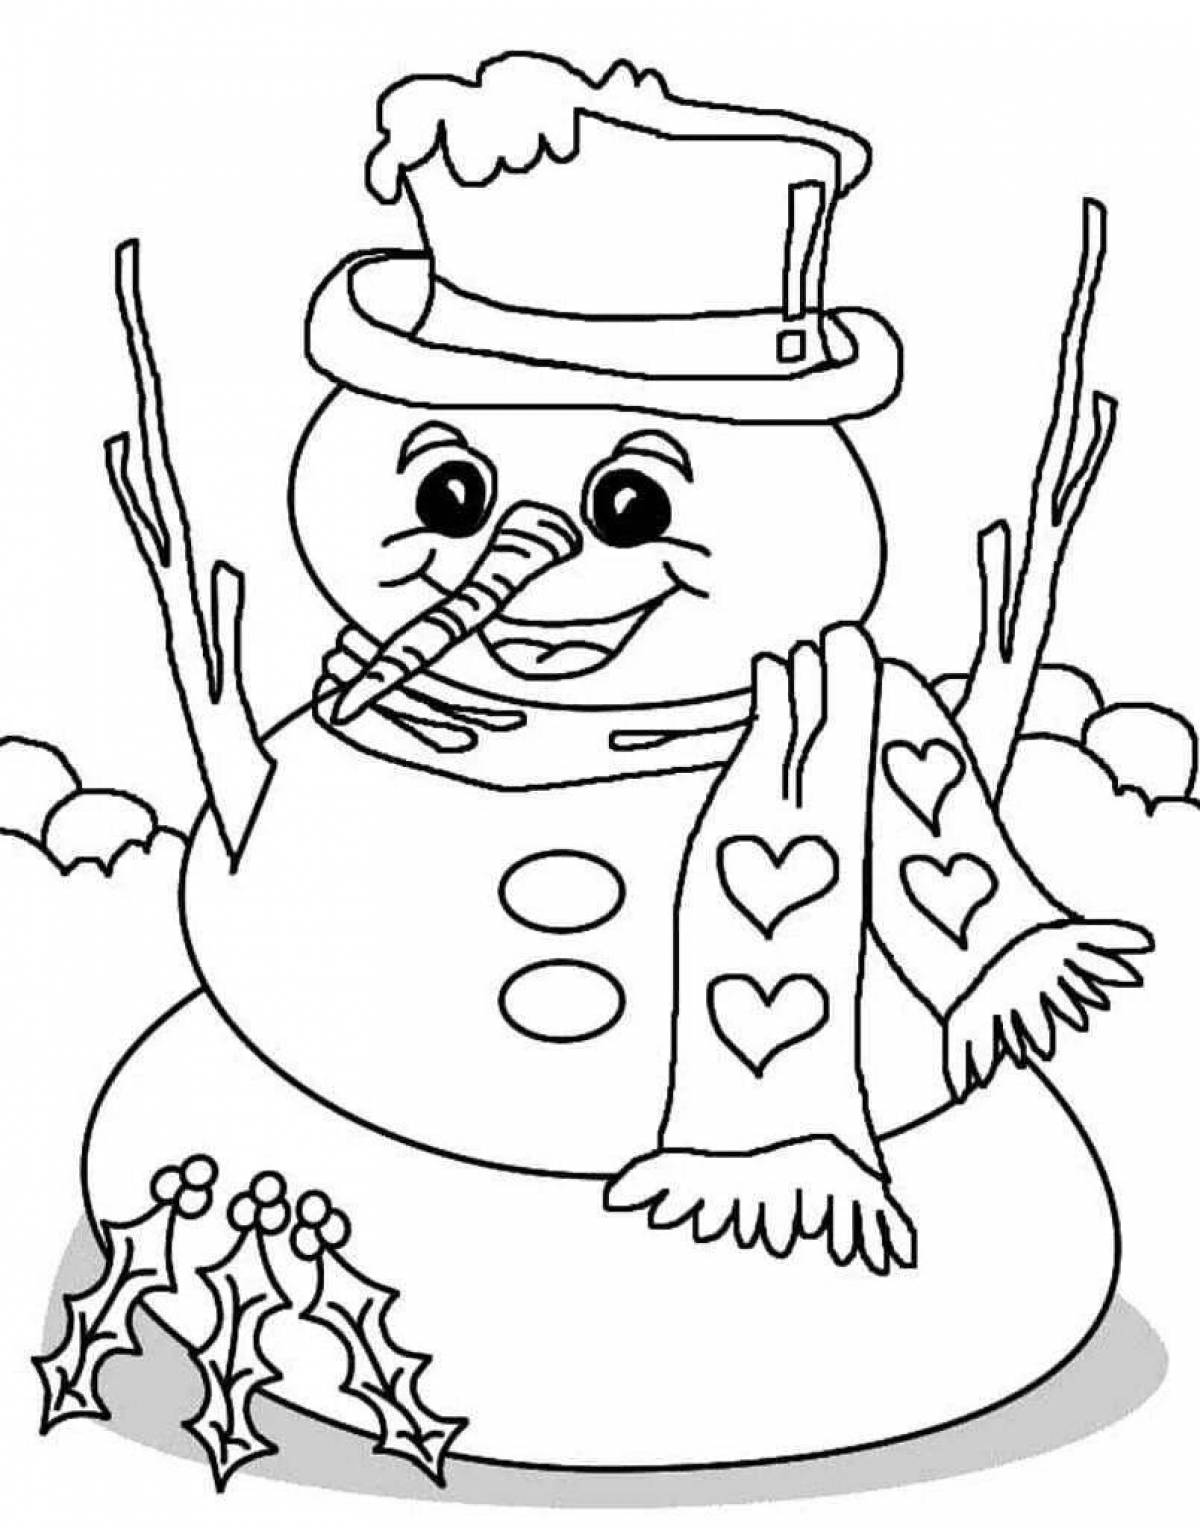 Snowman #2